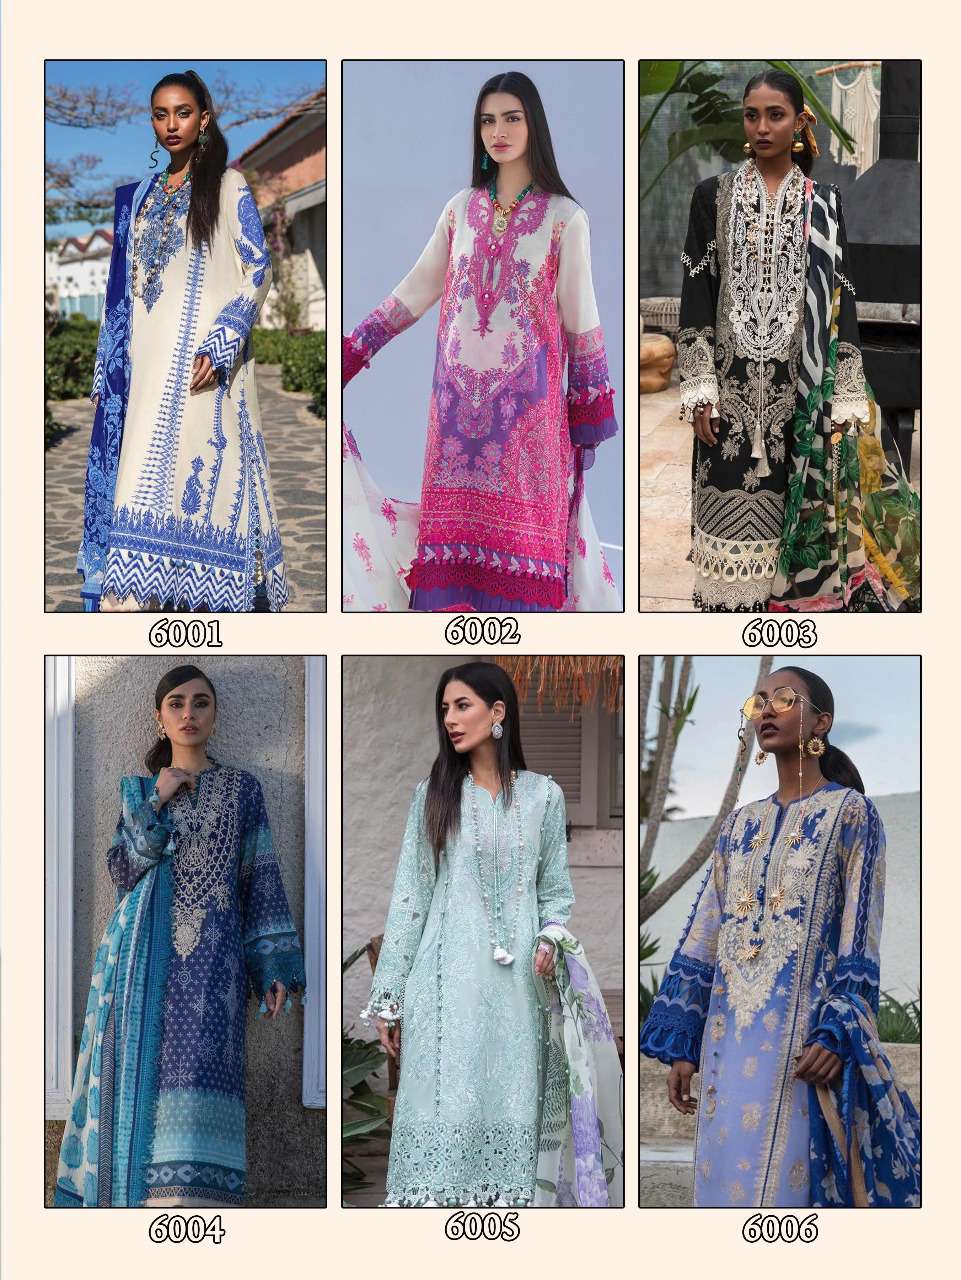 majesty sana safina vol 6 6001-6006 series pakistani designer salwar suits online